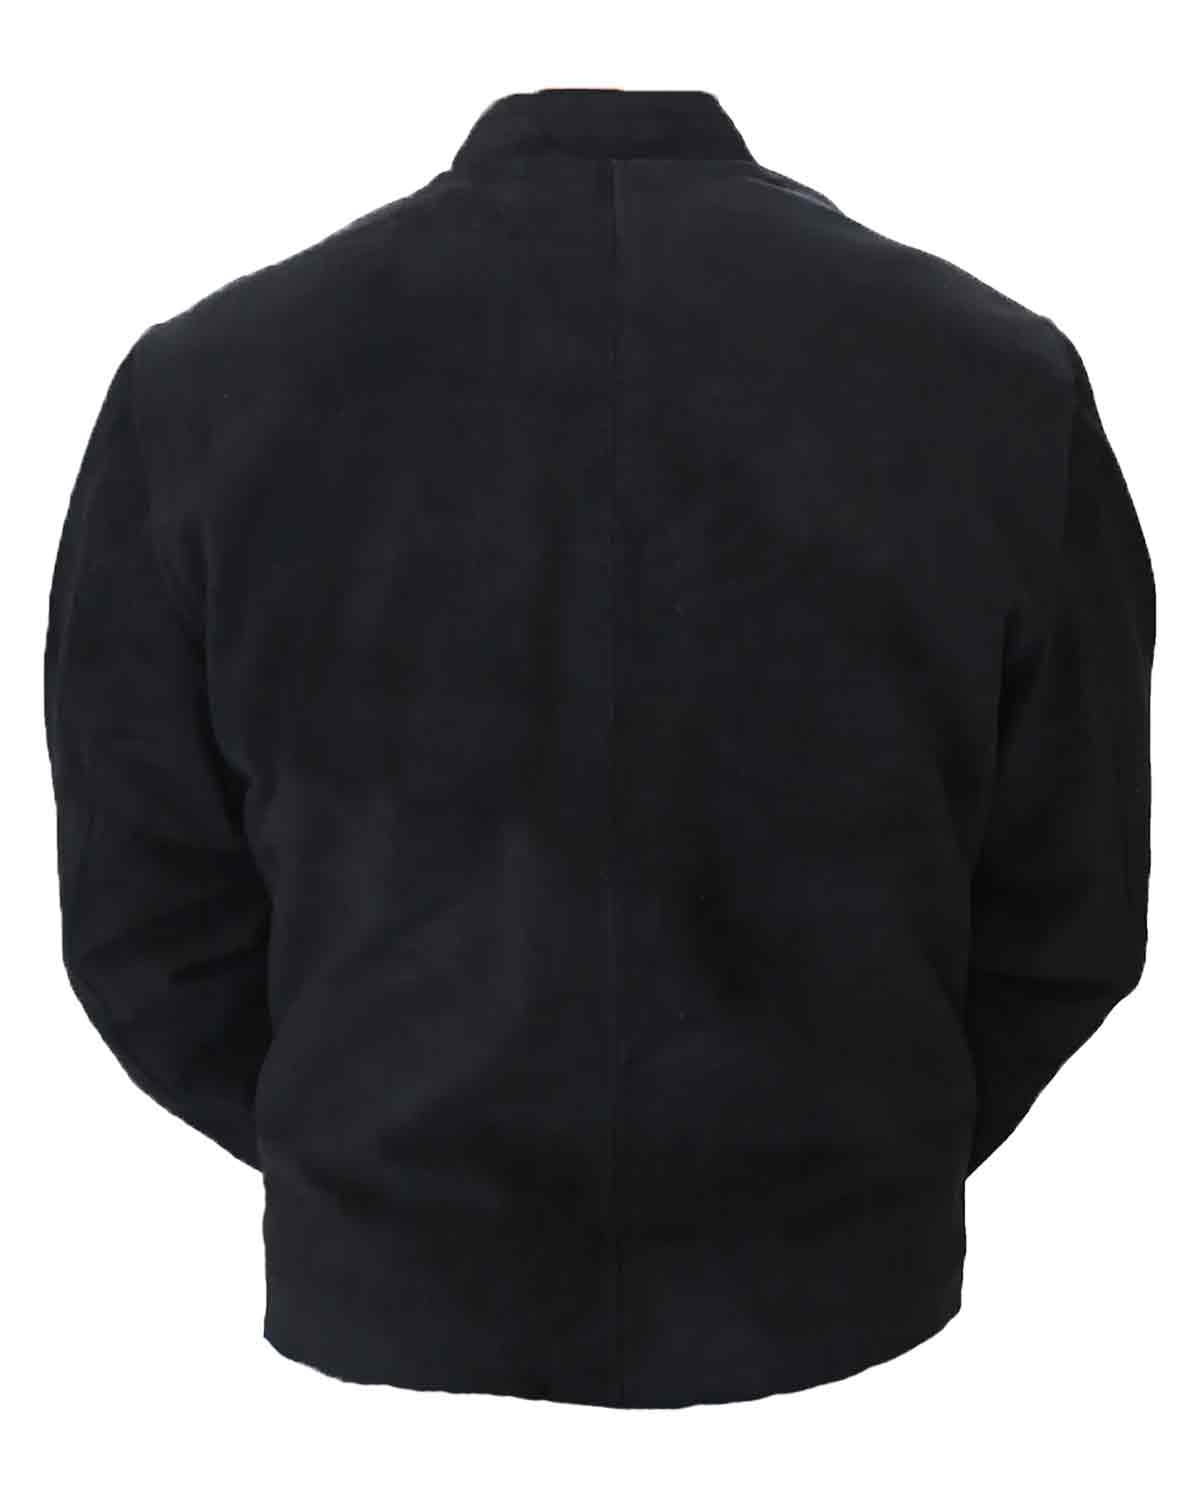 Elite James Bond Spectre Morocco Black Leather Jacket